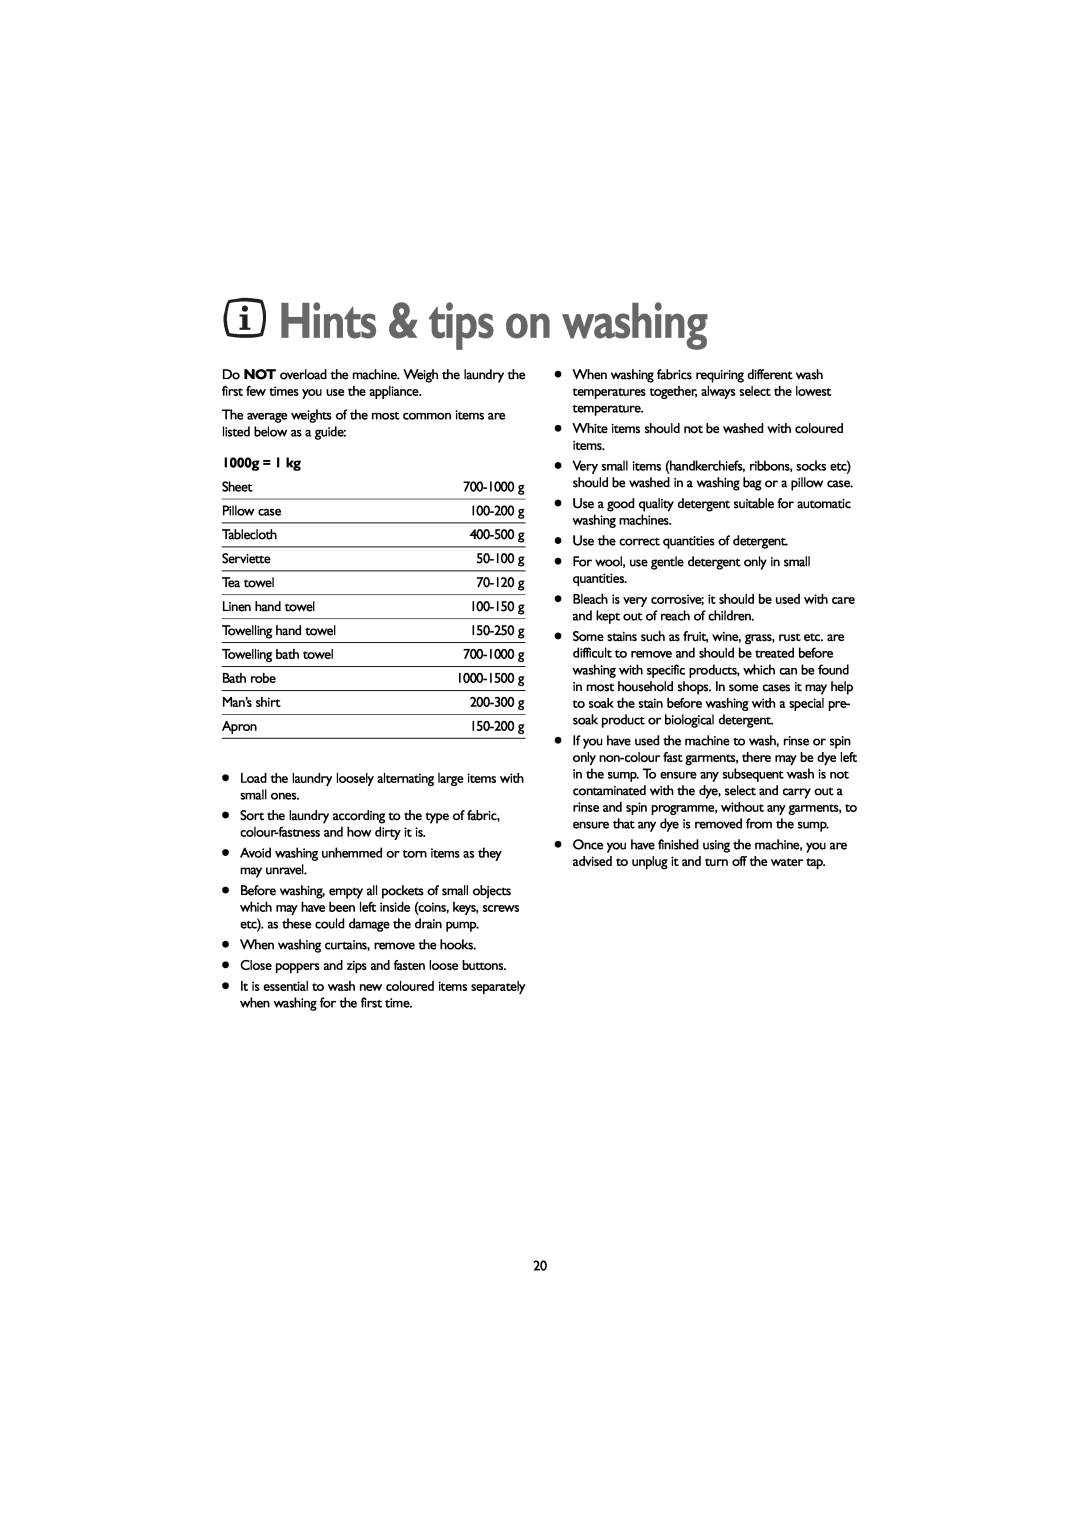 John Lewis JLWM 1203 instruction manual Hints & tips on washing, 1000g = 1 kg 